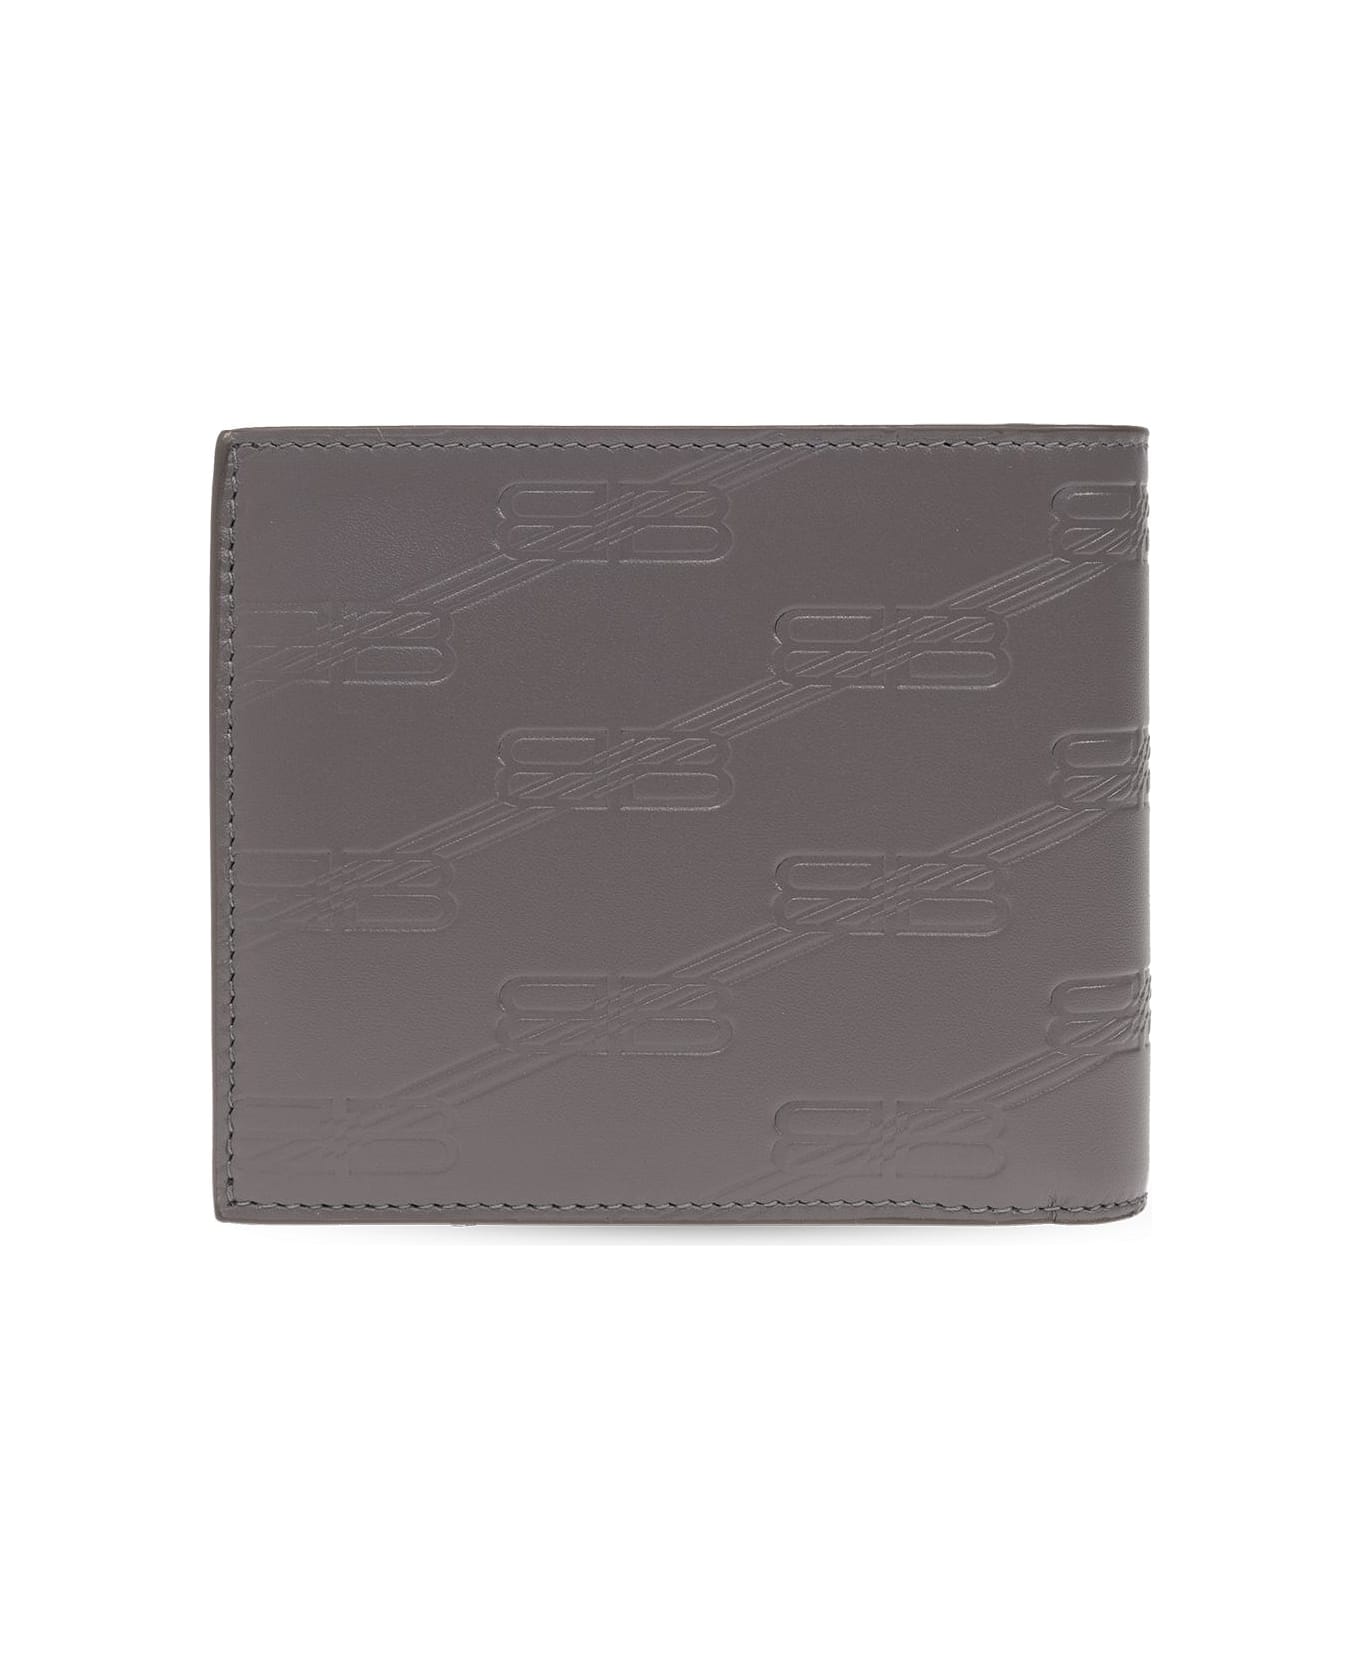 Balenciaga Leather Bifold Wallet - GREY